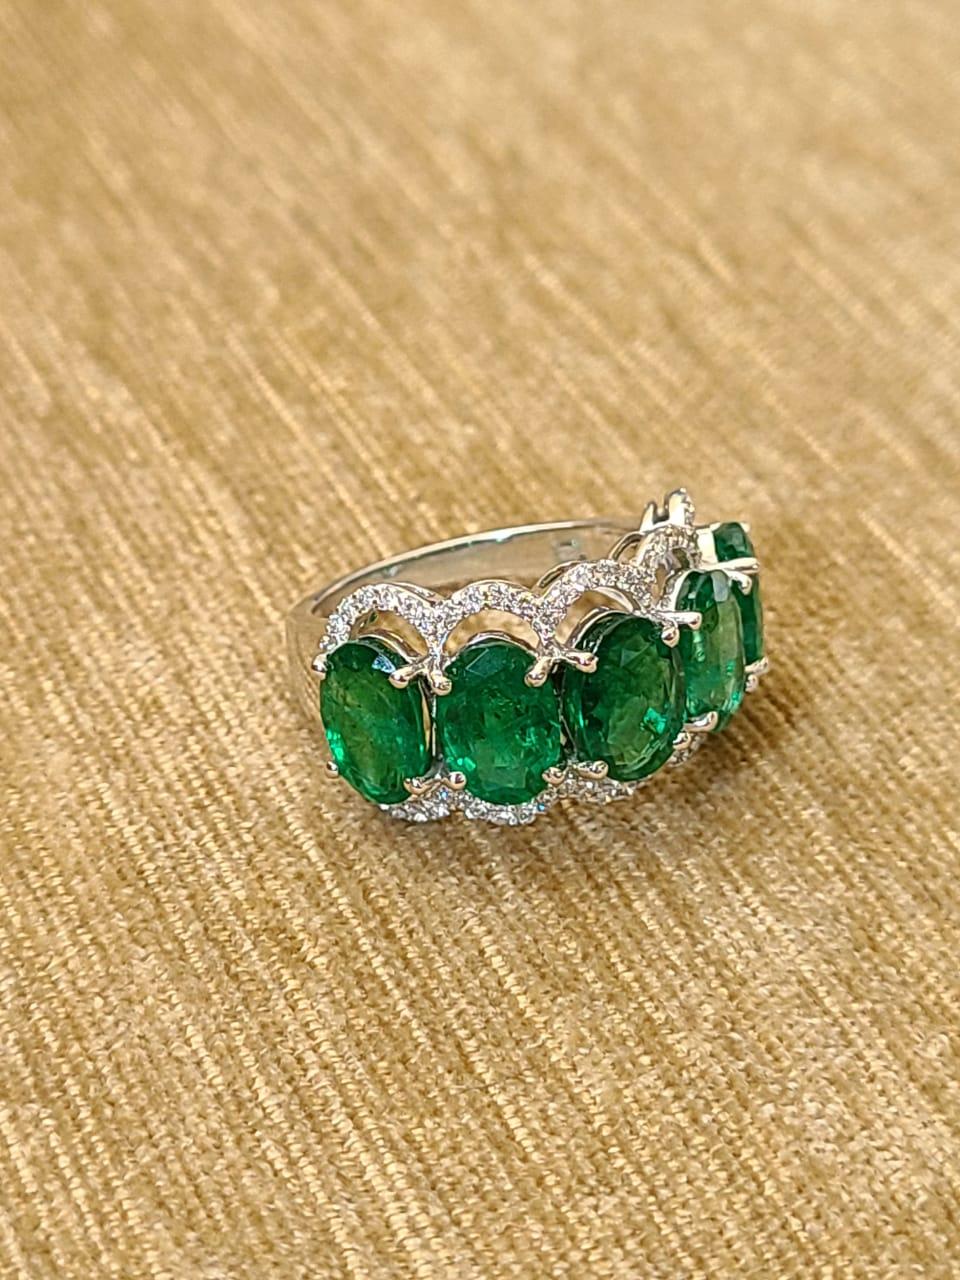 Emerald Cut 18 Karat Gold, 6.12 Carats Emerald and Diamonds Band Ring